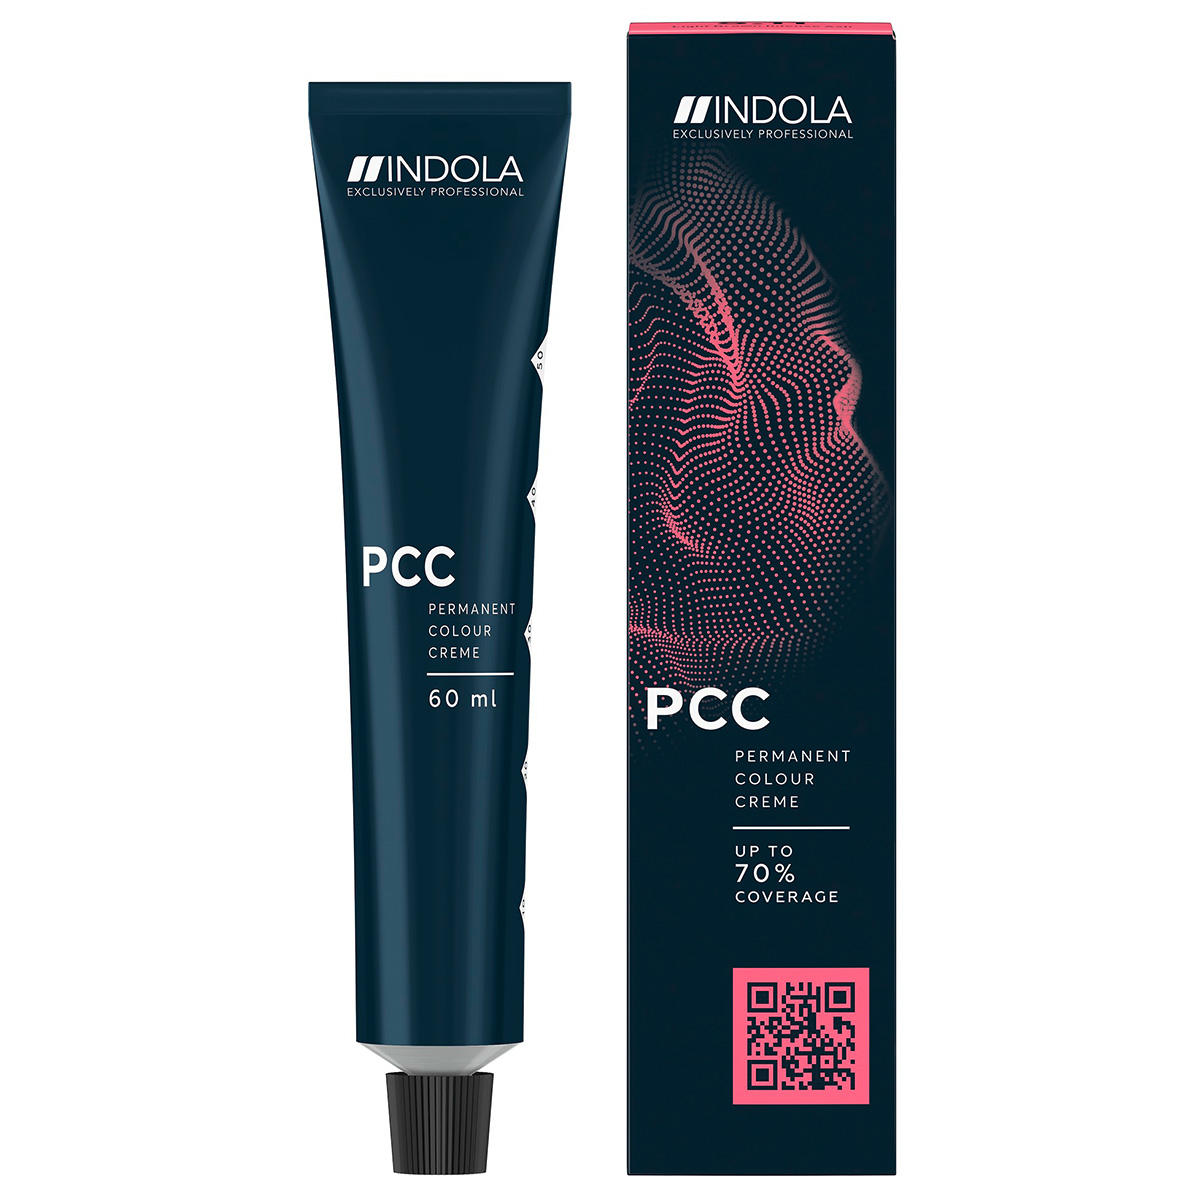 Indola PCC Permanent Colour Creme Cool & Neutral 8.1 Hellblond Asch 60 ml - 3